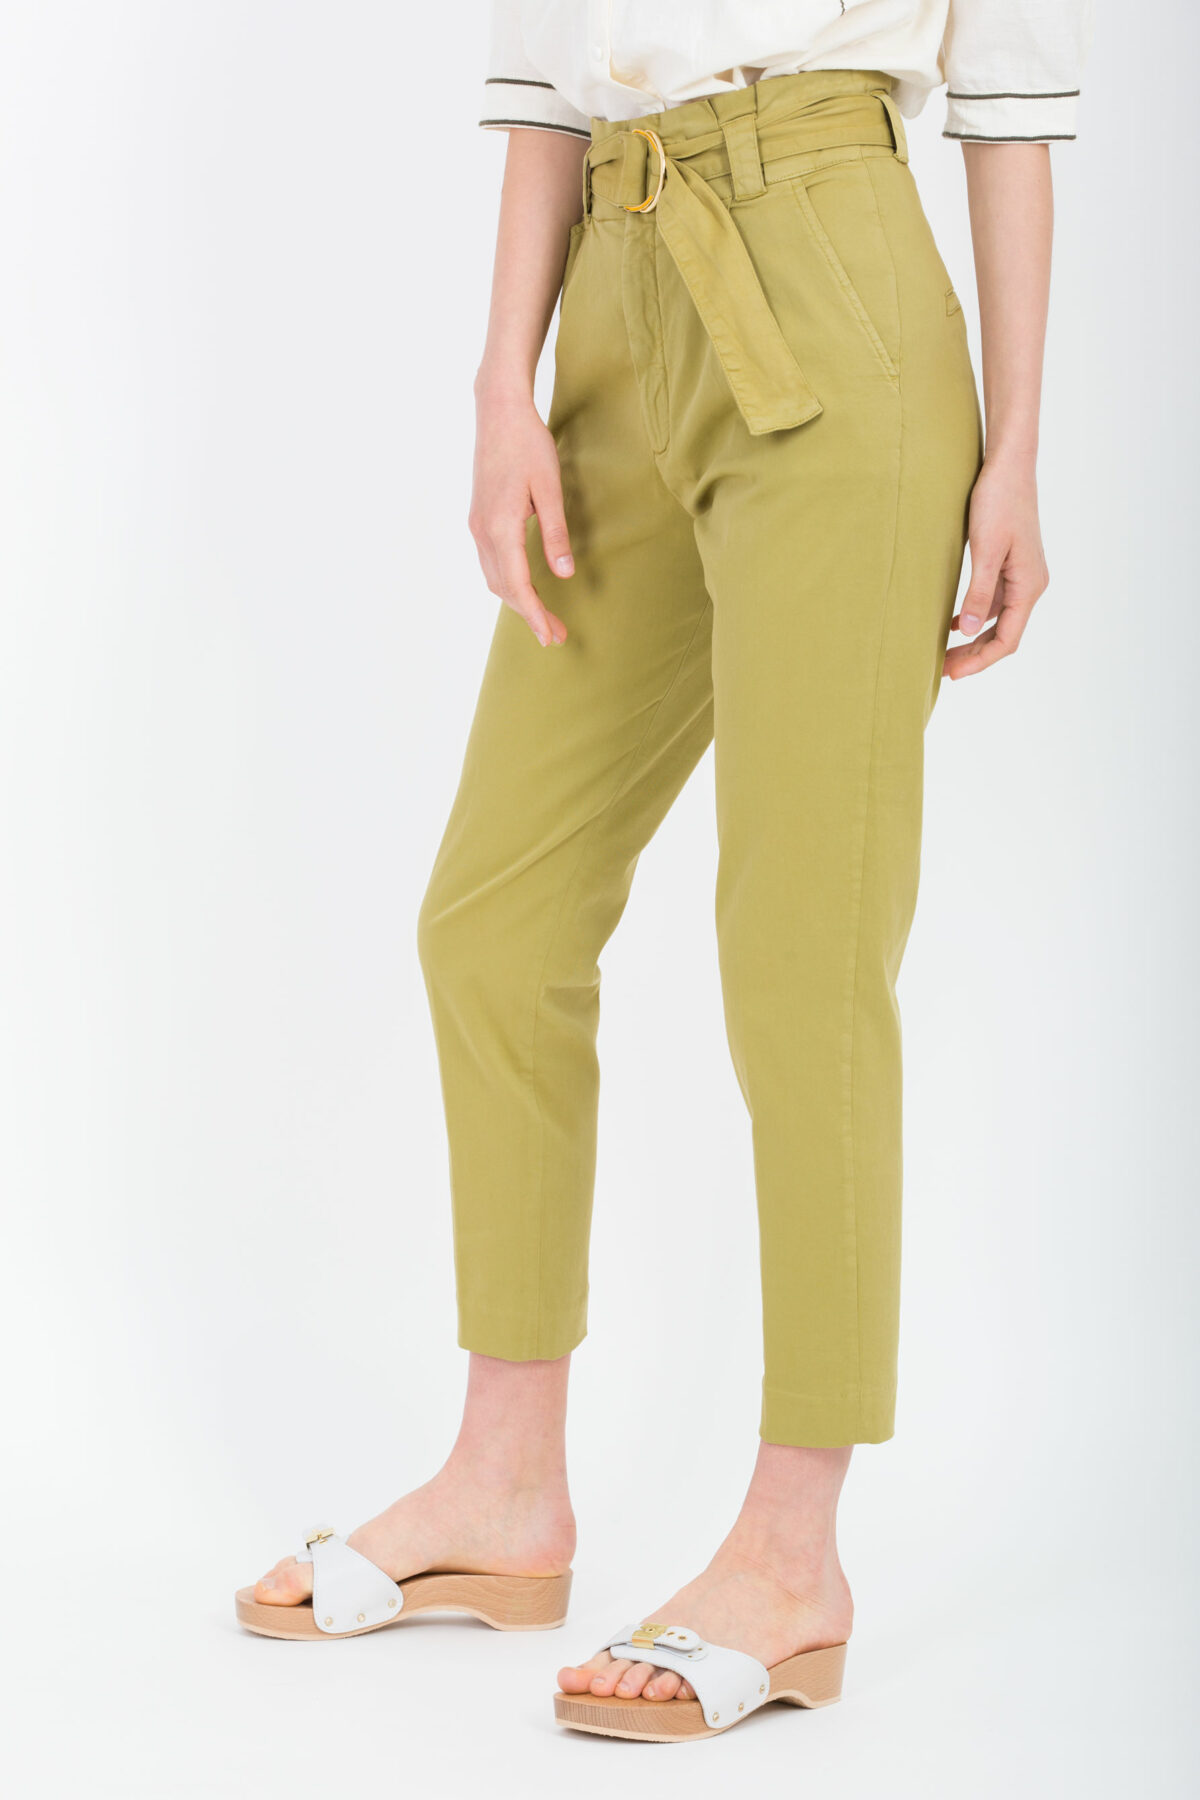 ava-olive-high-waisted-trousers-belt-pleats-reiko-matchboxathens